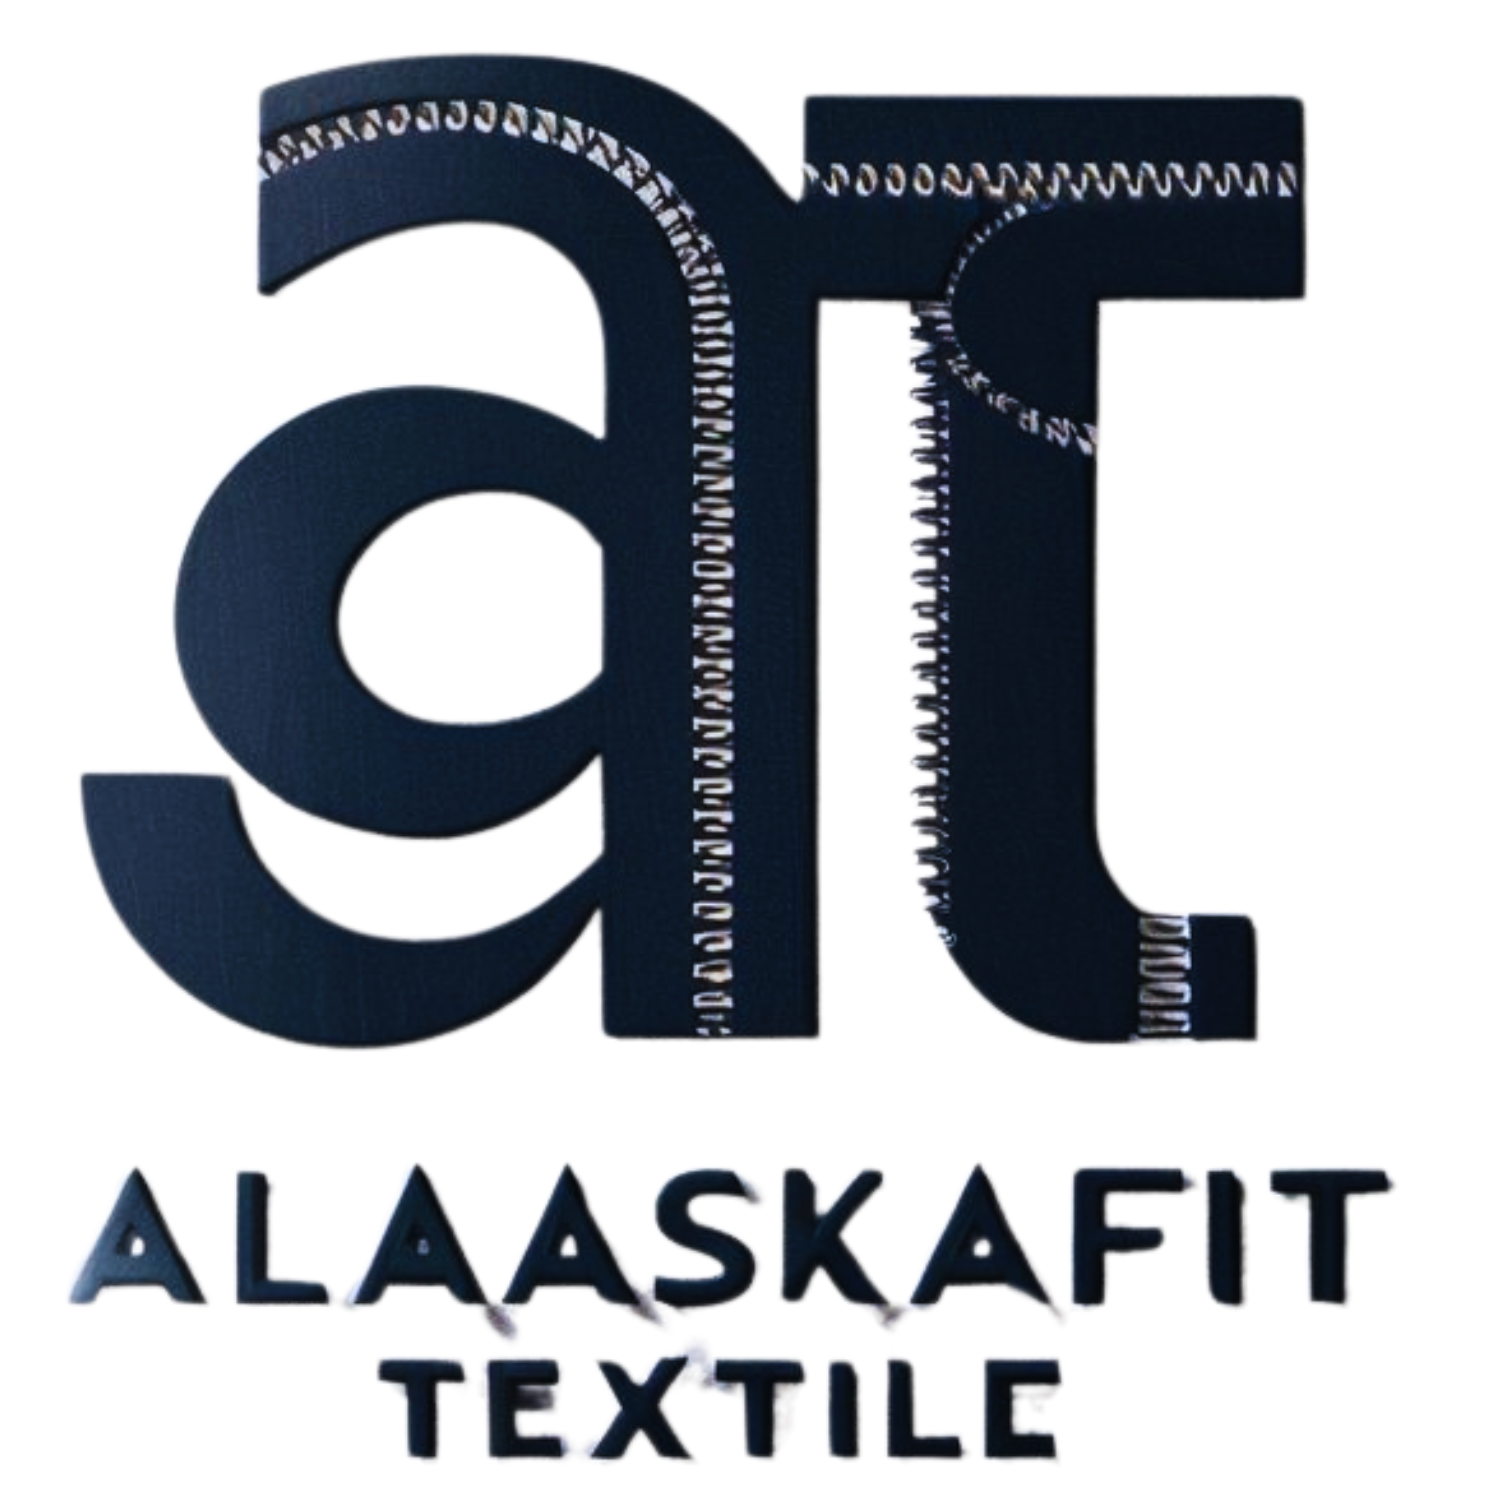 Alaaskafit Textile